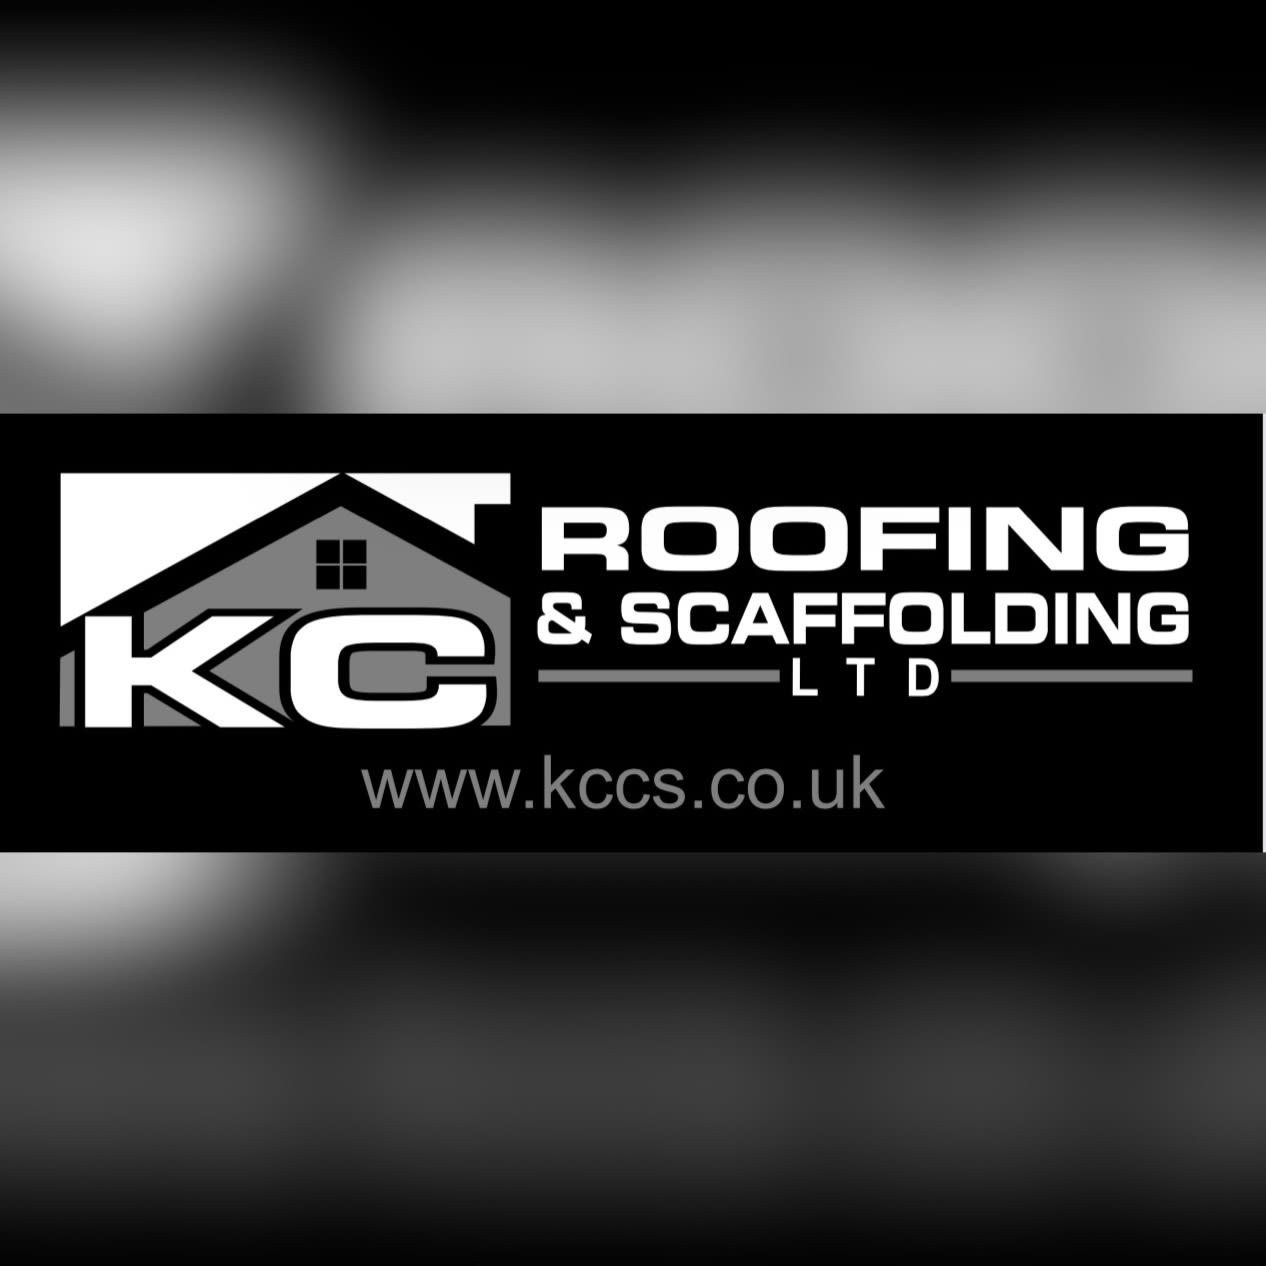 K C Roofing & Scaffolding Ltd - London, London E9 7BW - 020 8984 1256 | ShowMeLocal.com